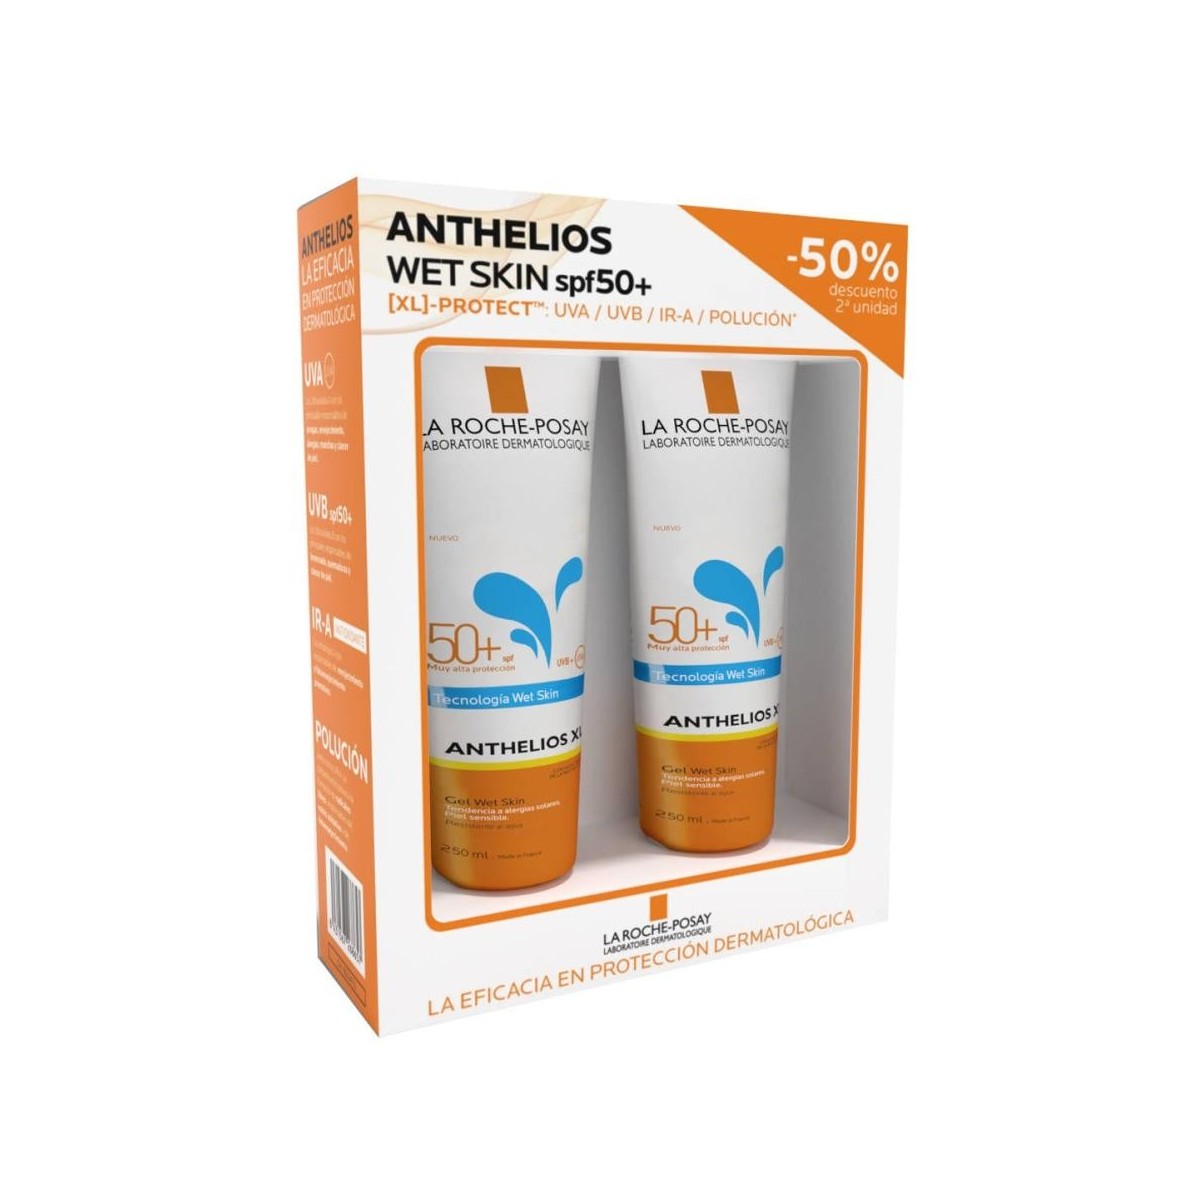 anthelios-xl-gel-wet-skin-spf50-la-roche-posay-250ml250ml-duplo